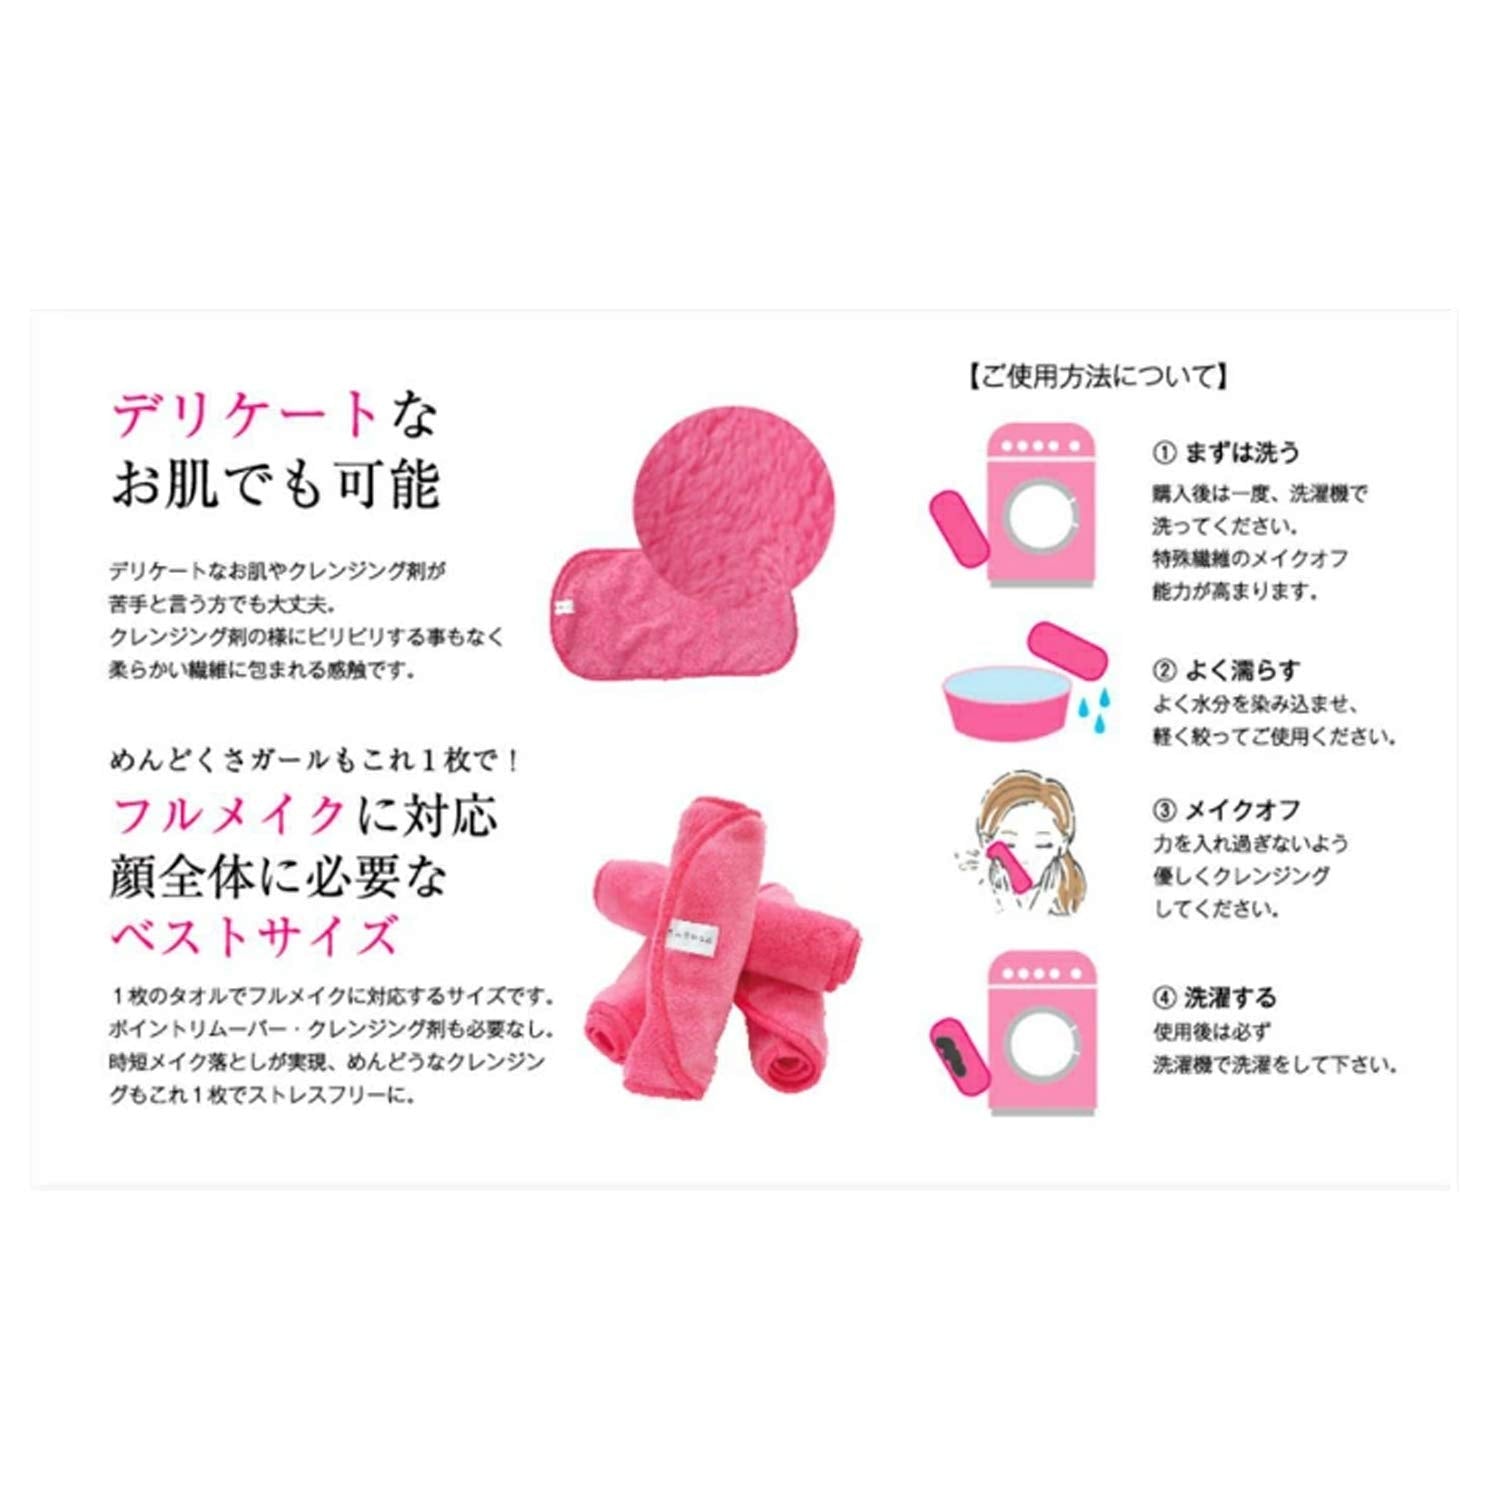 Canmake Powder Cheeks Pw25 Sugar Orange Shade 4.4G Compact - YOYO JAPAN